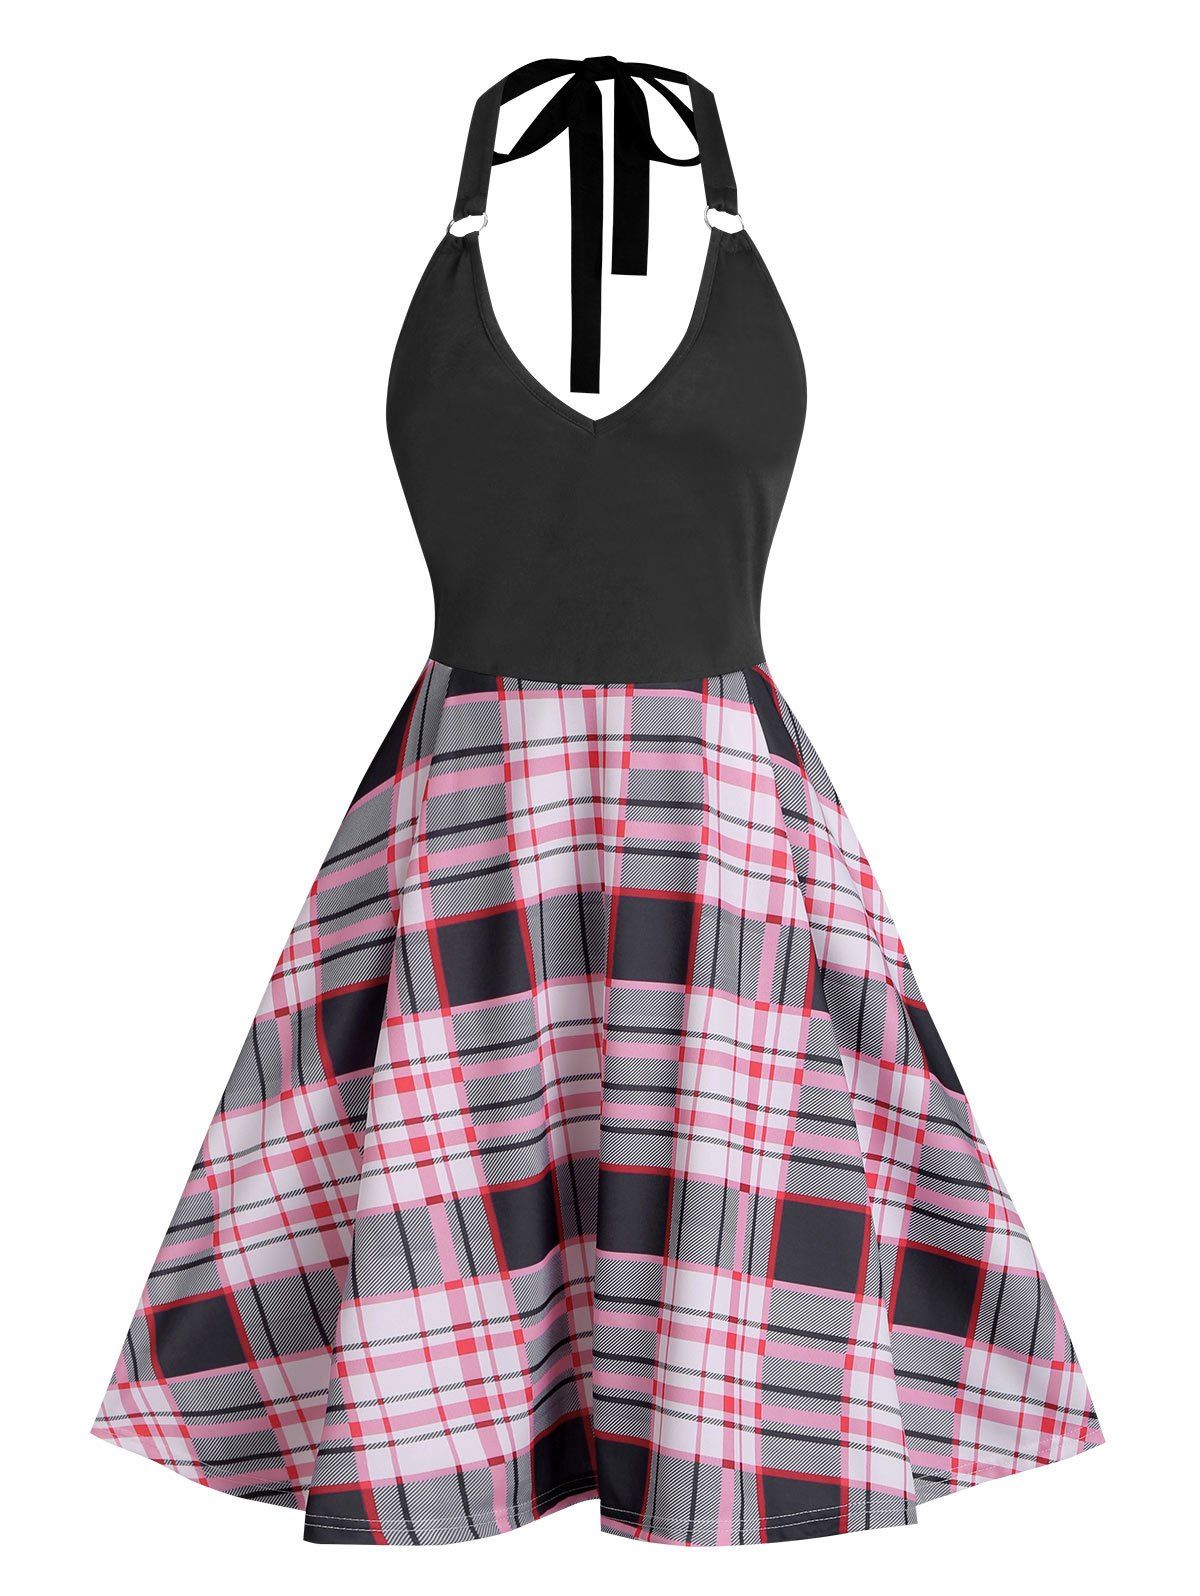 Vintage Plaid Checkered Print Mini Dress O Ring Halter Bowknot Backless Dress Contrast Flare Skater Dress - BLACK S